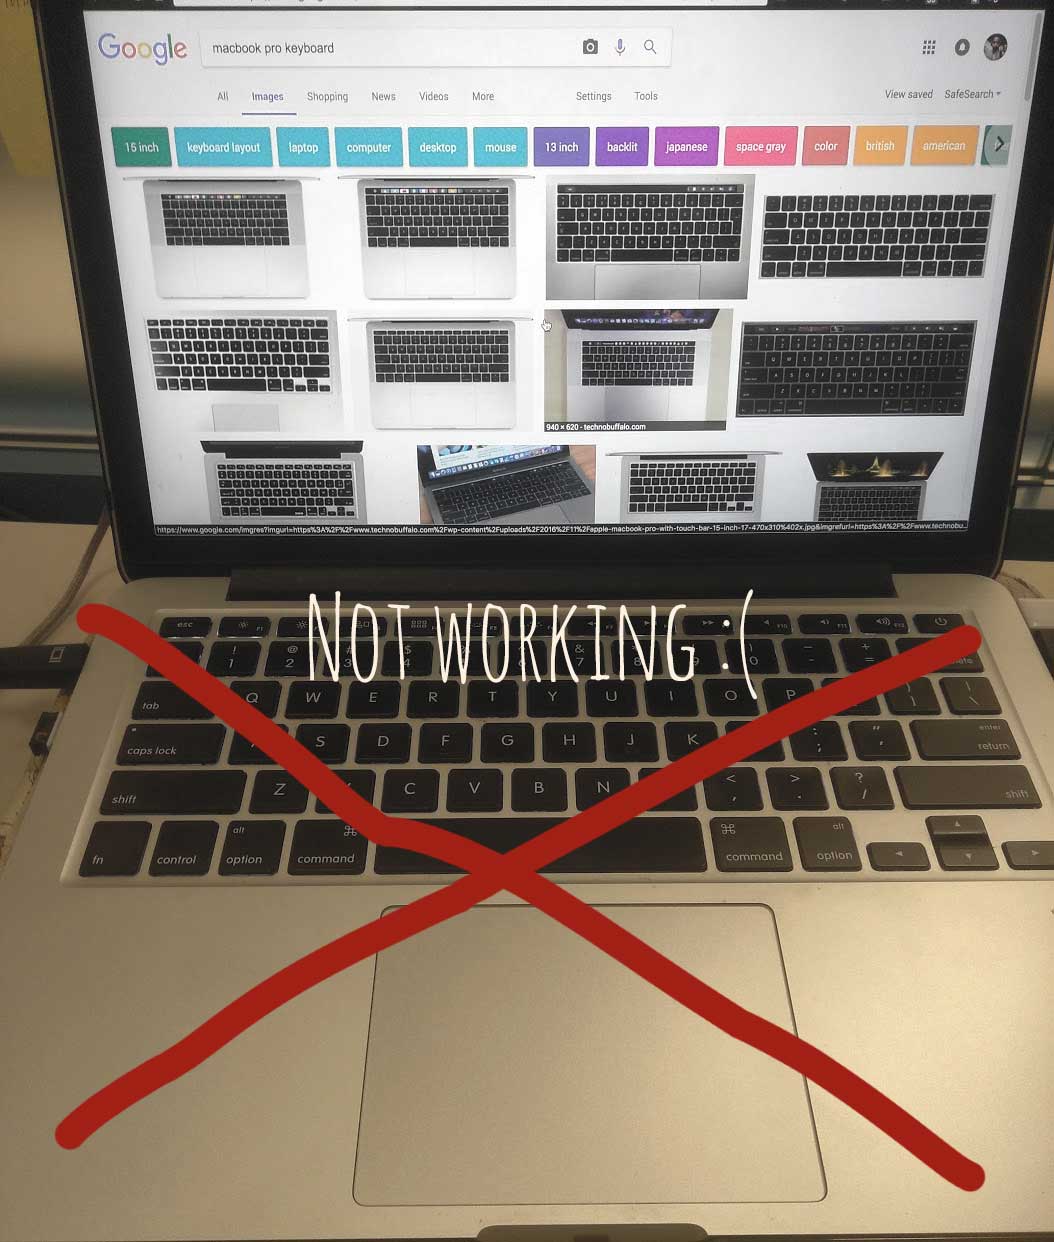 switchresx 4k 60 hz not working mac pro 15 nvidia 2015